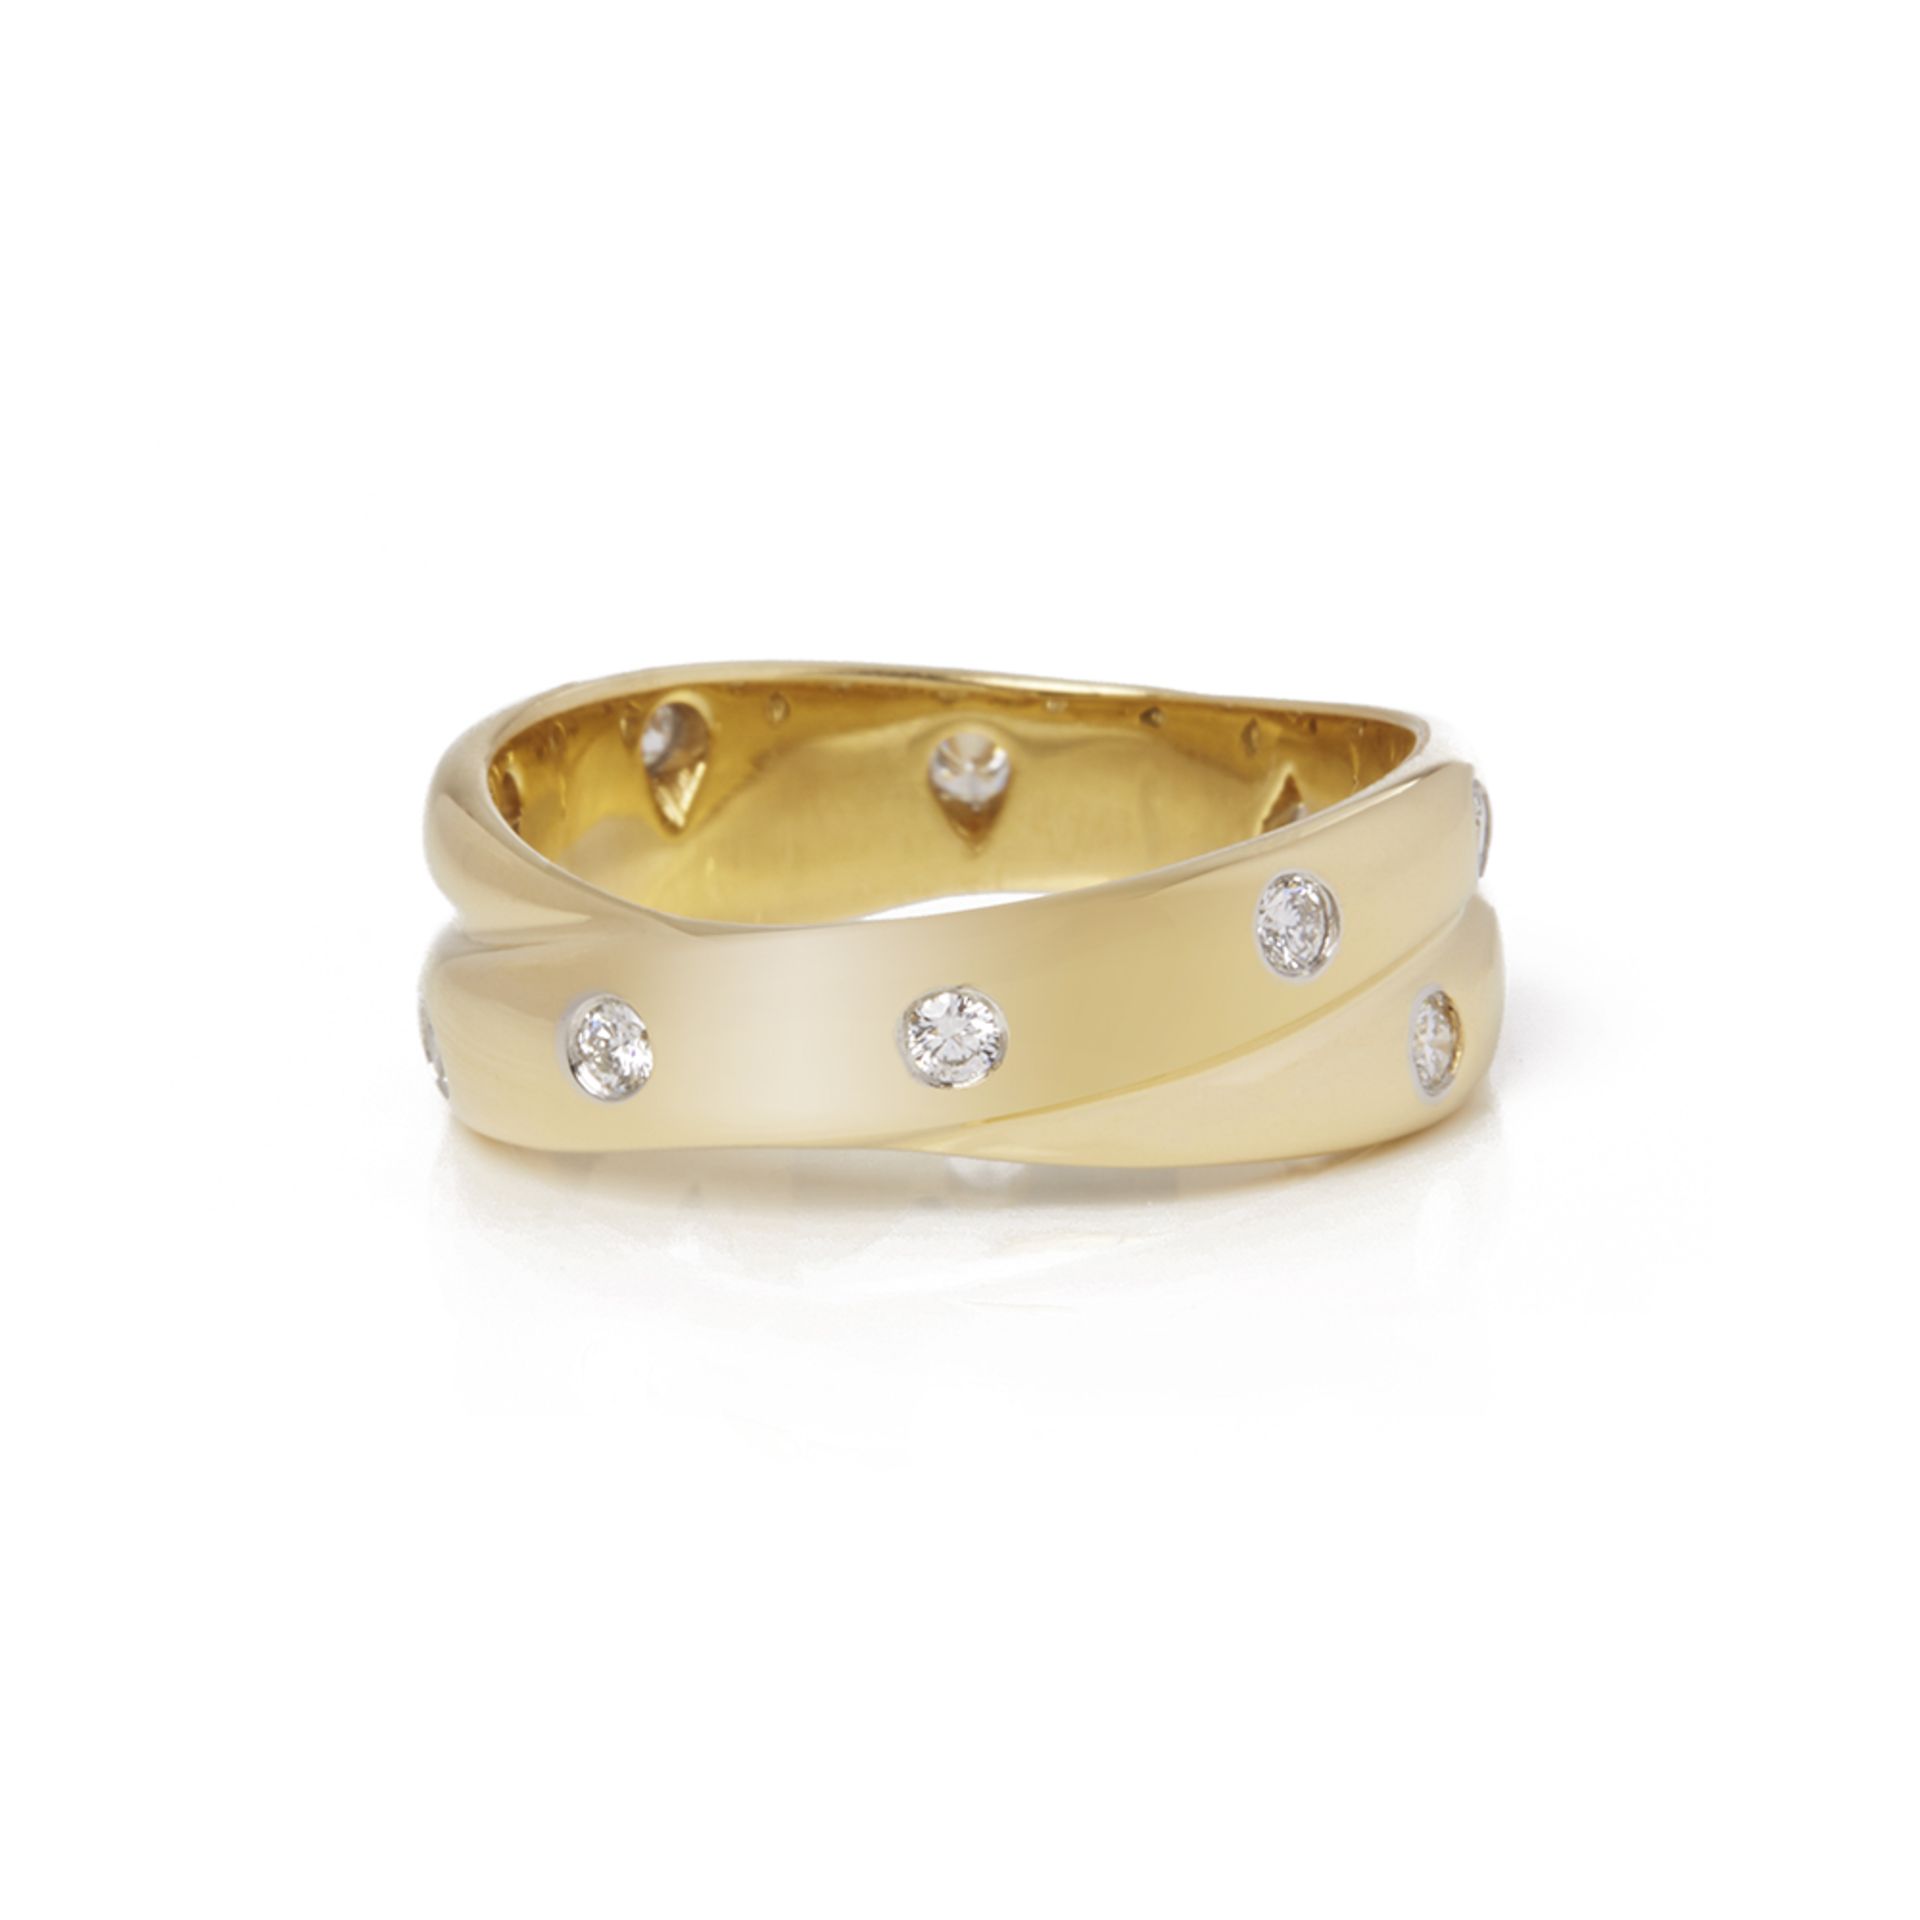 Tiffany & Co. 18k Yellow Gold Diamond Etoile Ring - Image 2 of 6